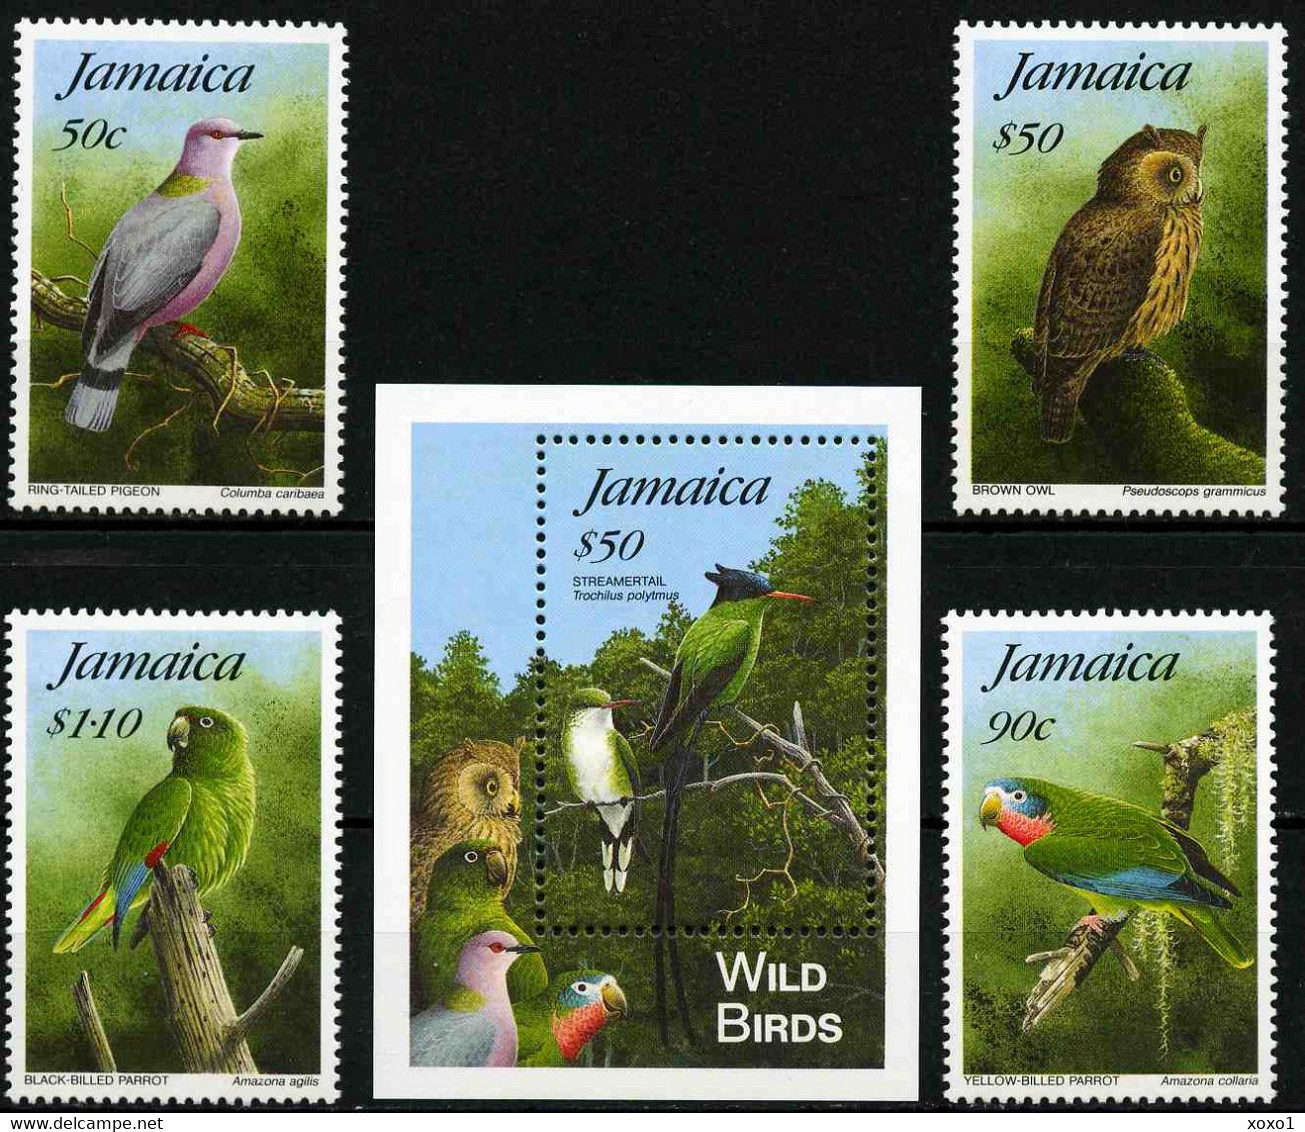 Jamaica 1995 MiNr. 852 - 855(Block 42) Jamaika Birds 4v+1bl MNH** 21,00 € - Owls